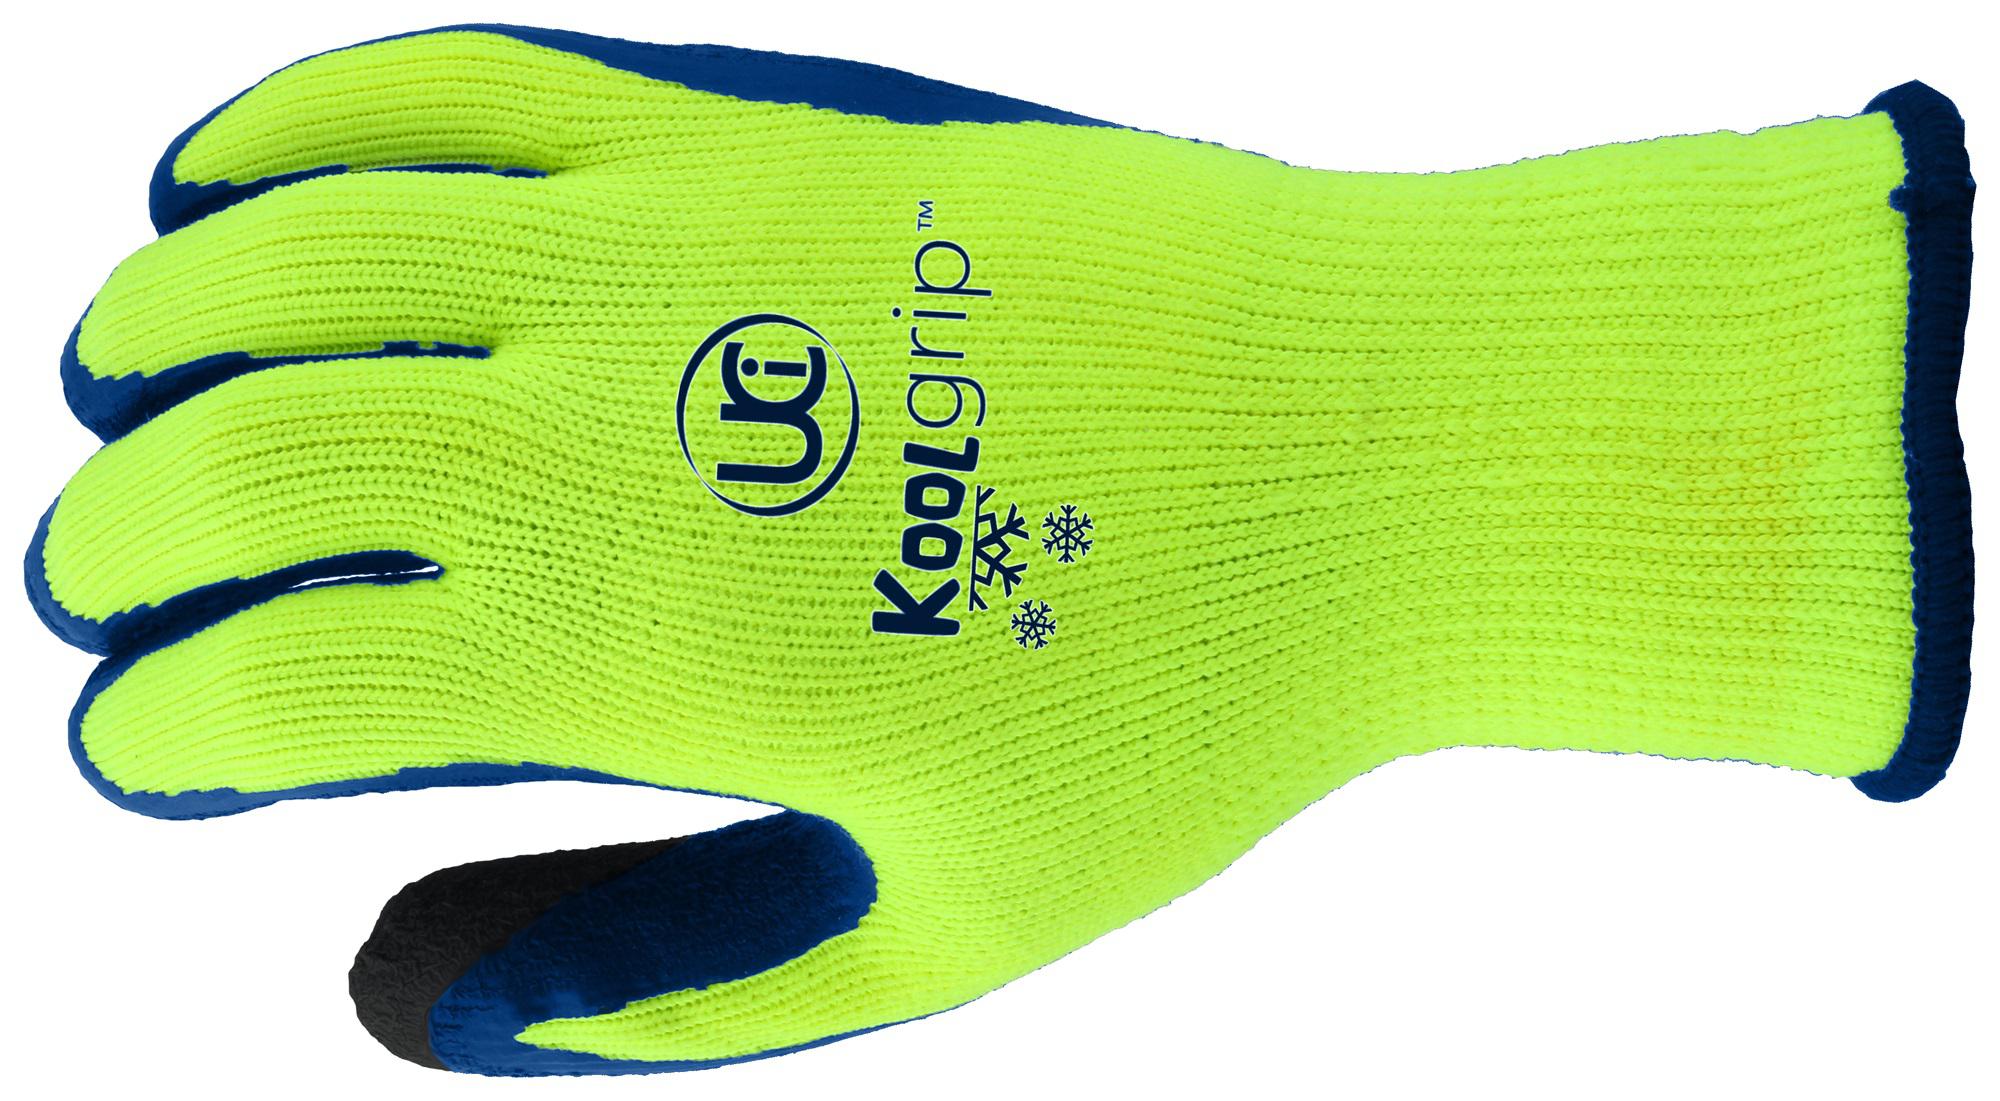 Uci G/koolgrip/ye/08 Thermal Latex Gloves, Pet, Blu/yel, M